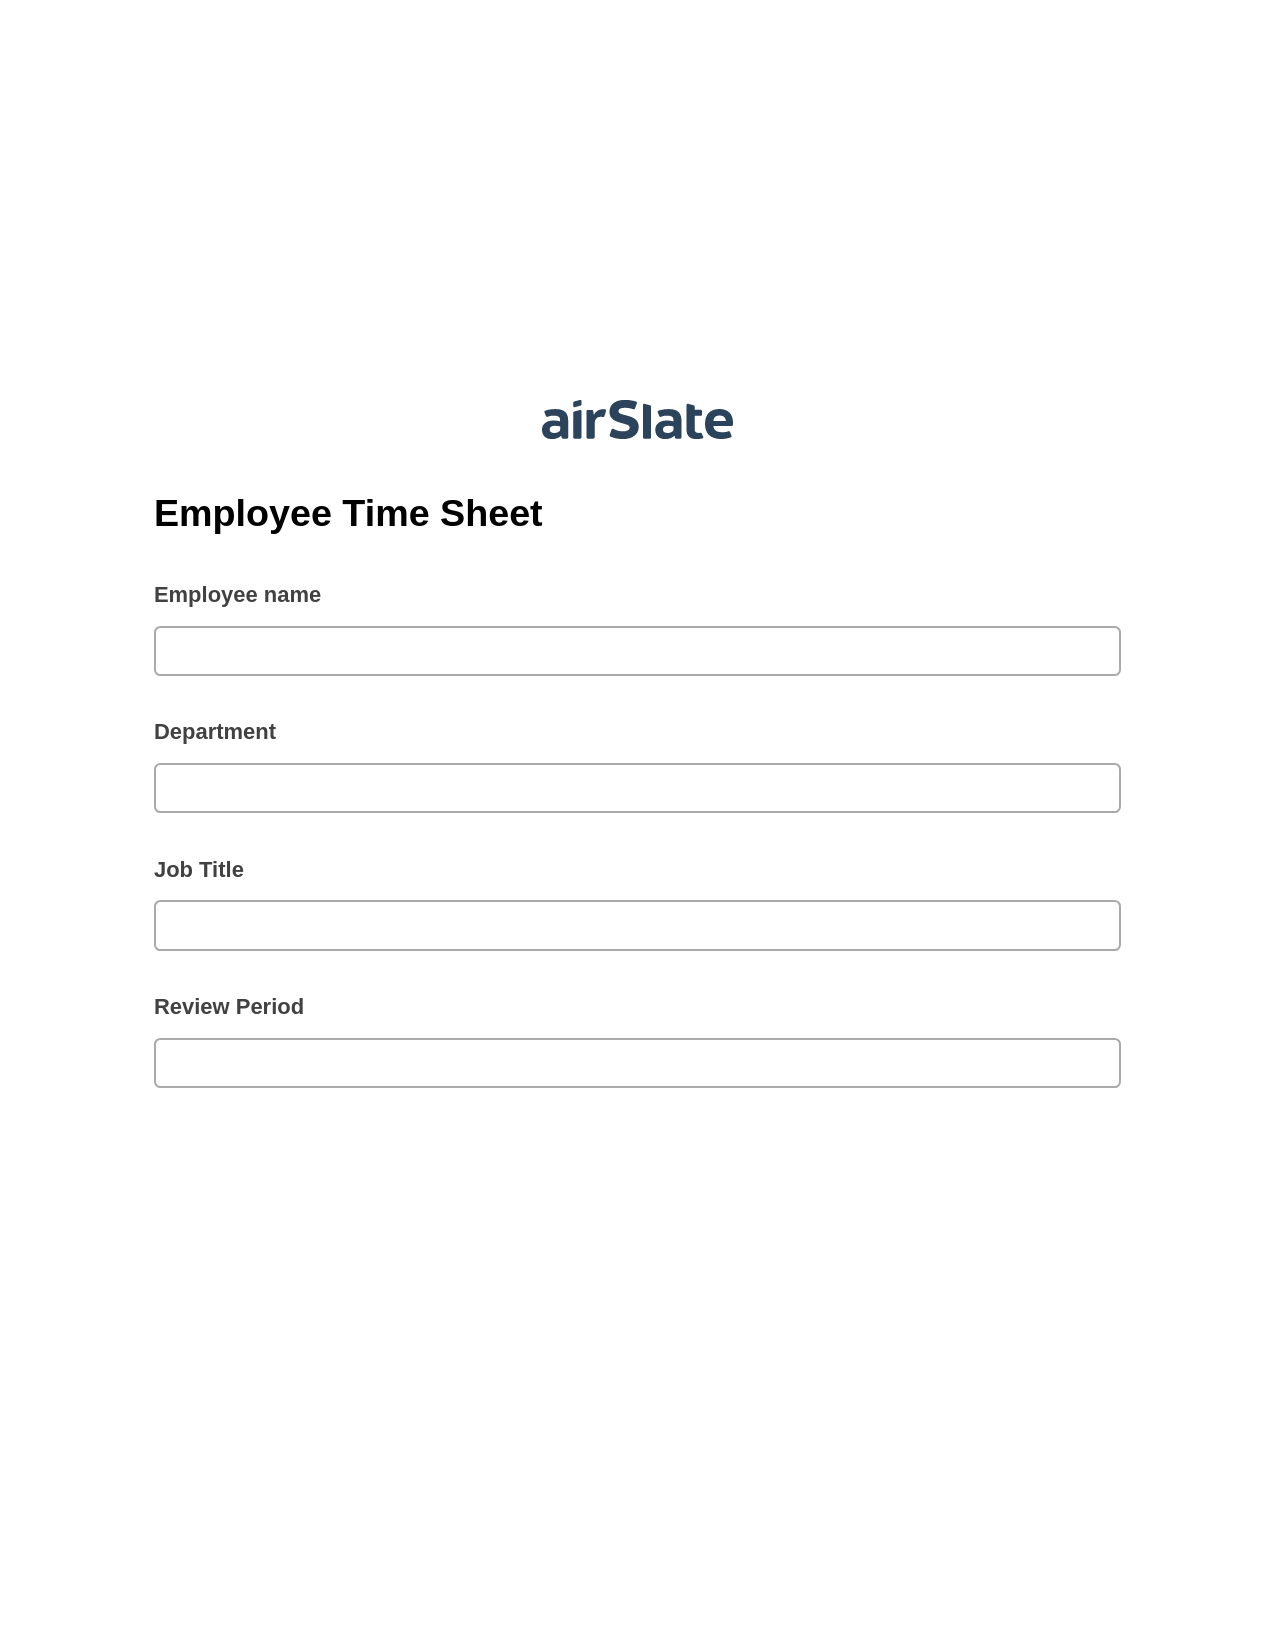 Employee Time Sheet Pre-fill Document Bot, Create Salesforce Records Bot, Slack Two-Way Binding Bot